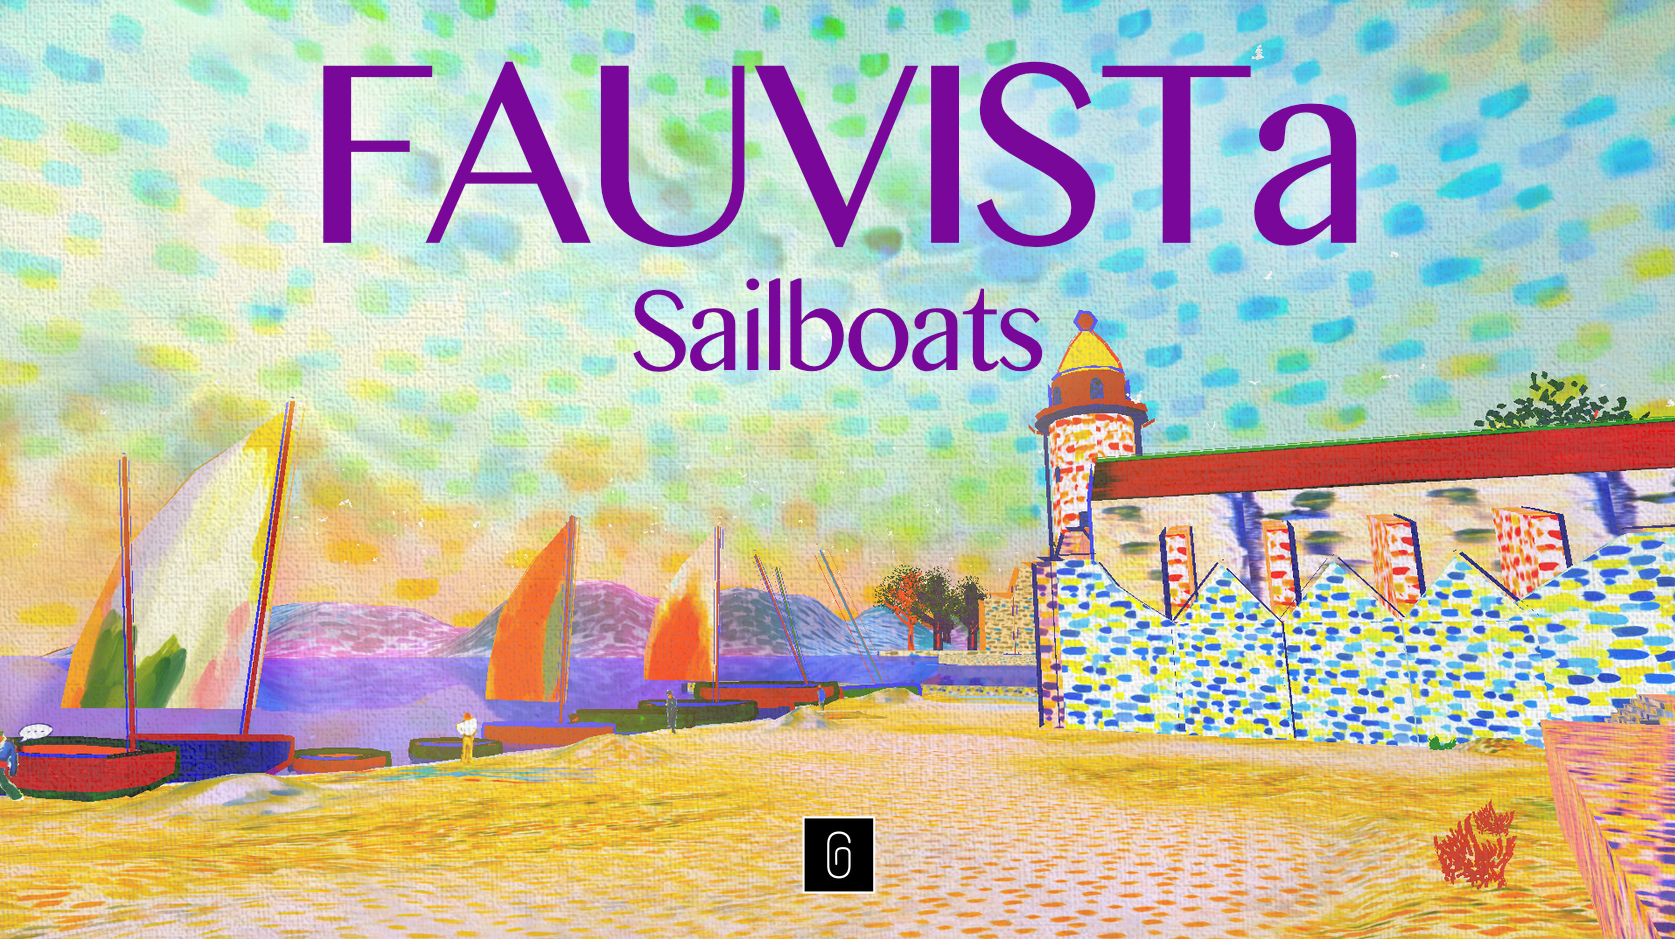 FAUVISTa - Sailboats